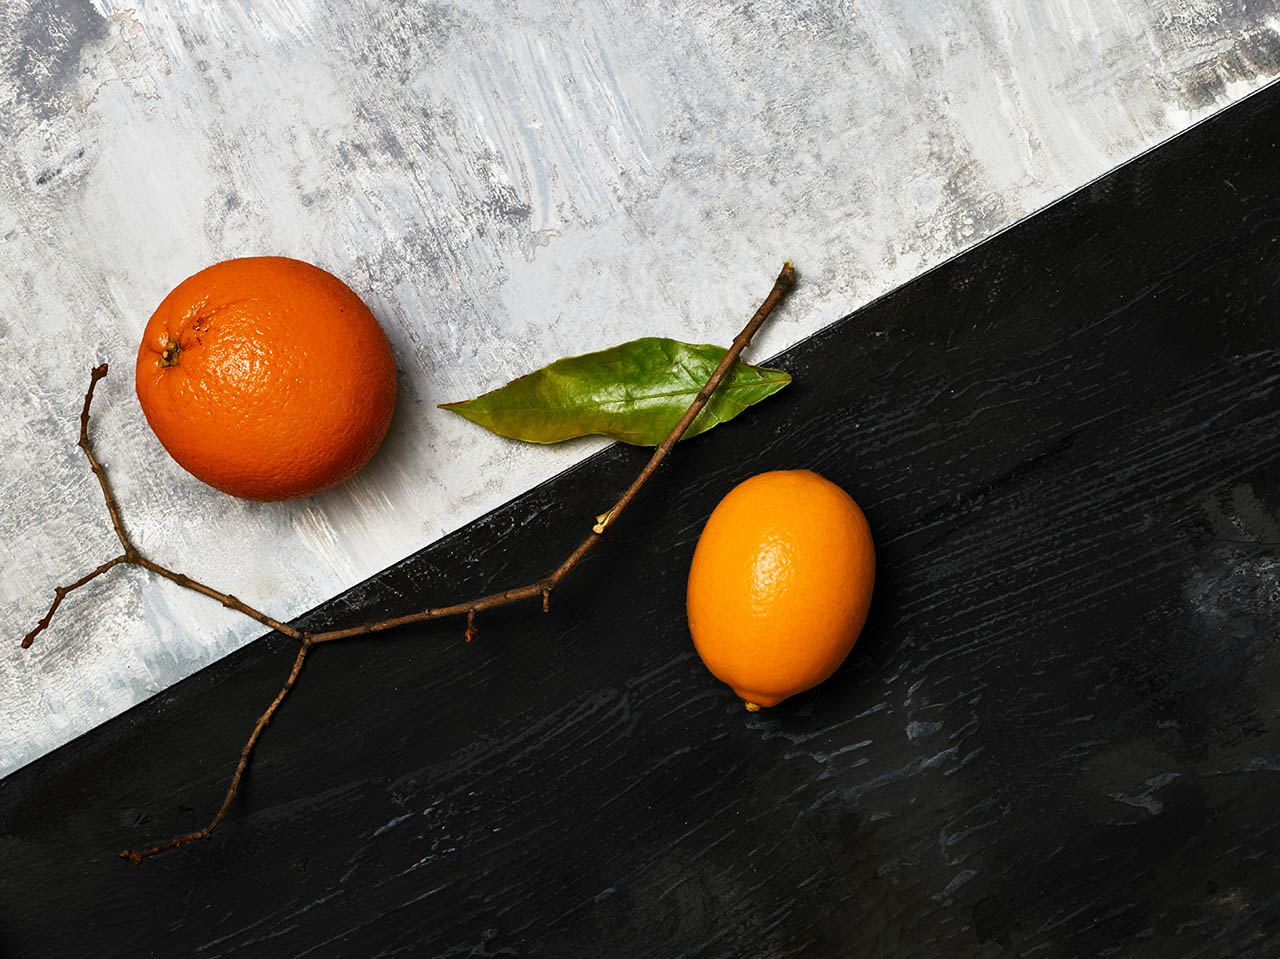  Orange importer and distributor in France and Europe - Beva Fruits International (BFI)